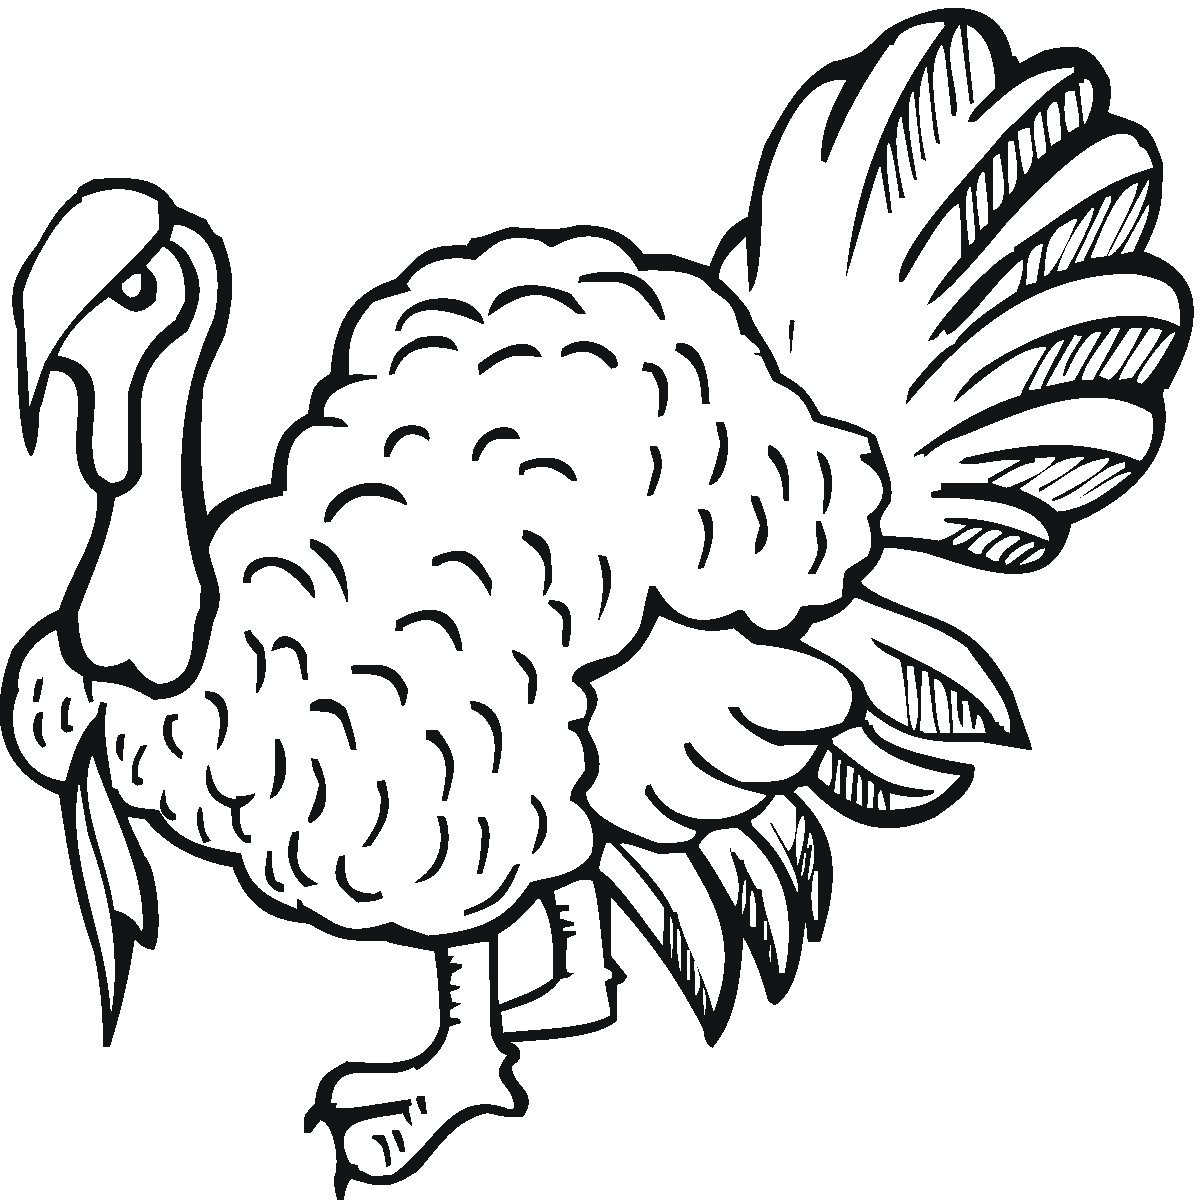 wild turkey coloring page